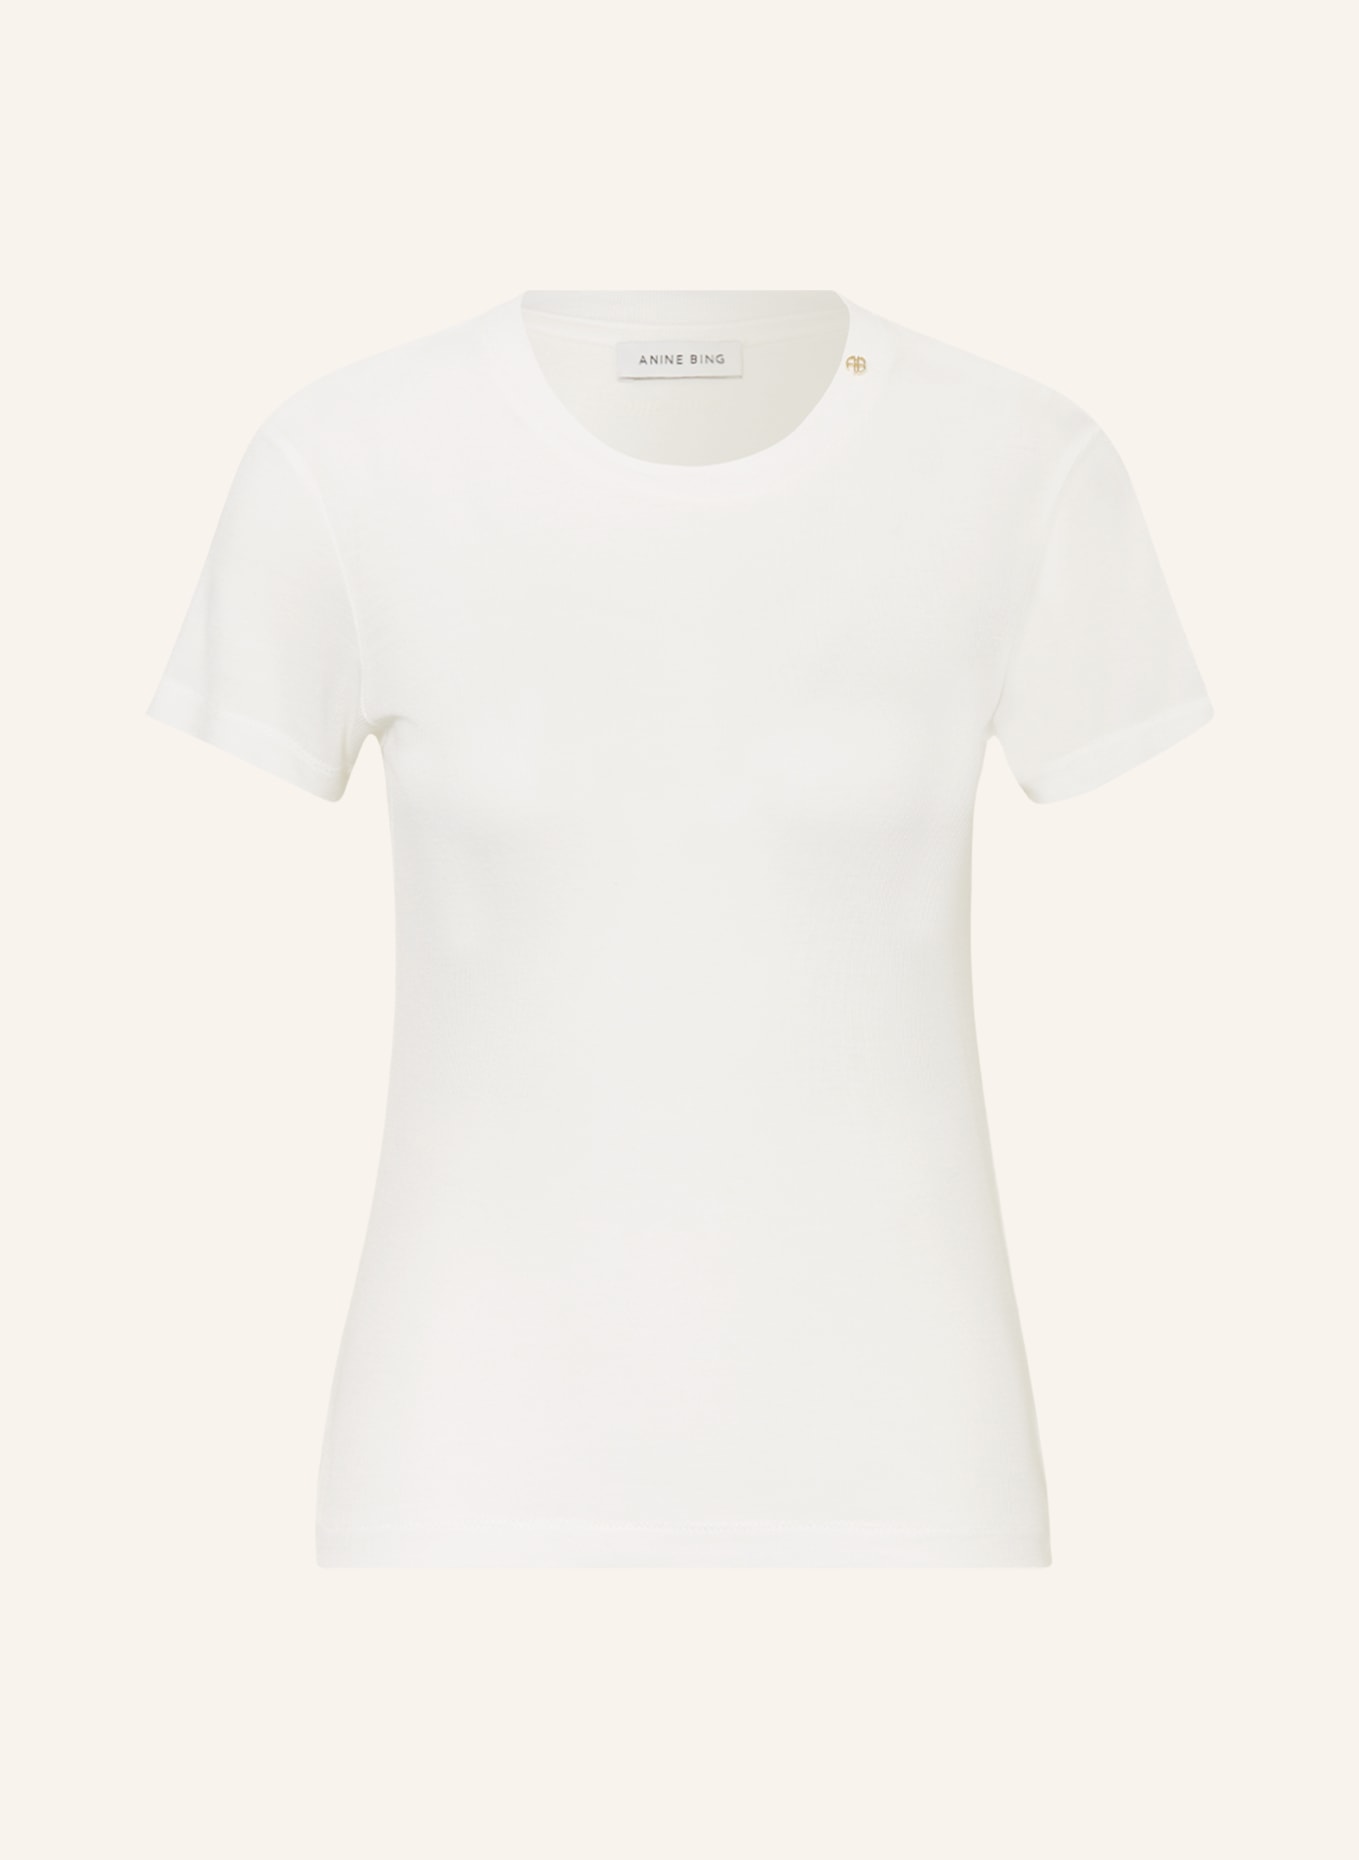 ANINE BING T-Shirt AMANI, Farbe: WEISS (Bild 1)